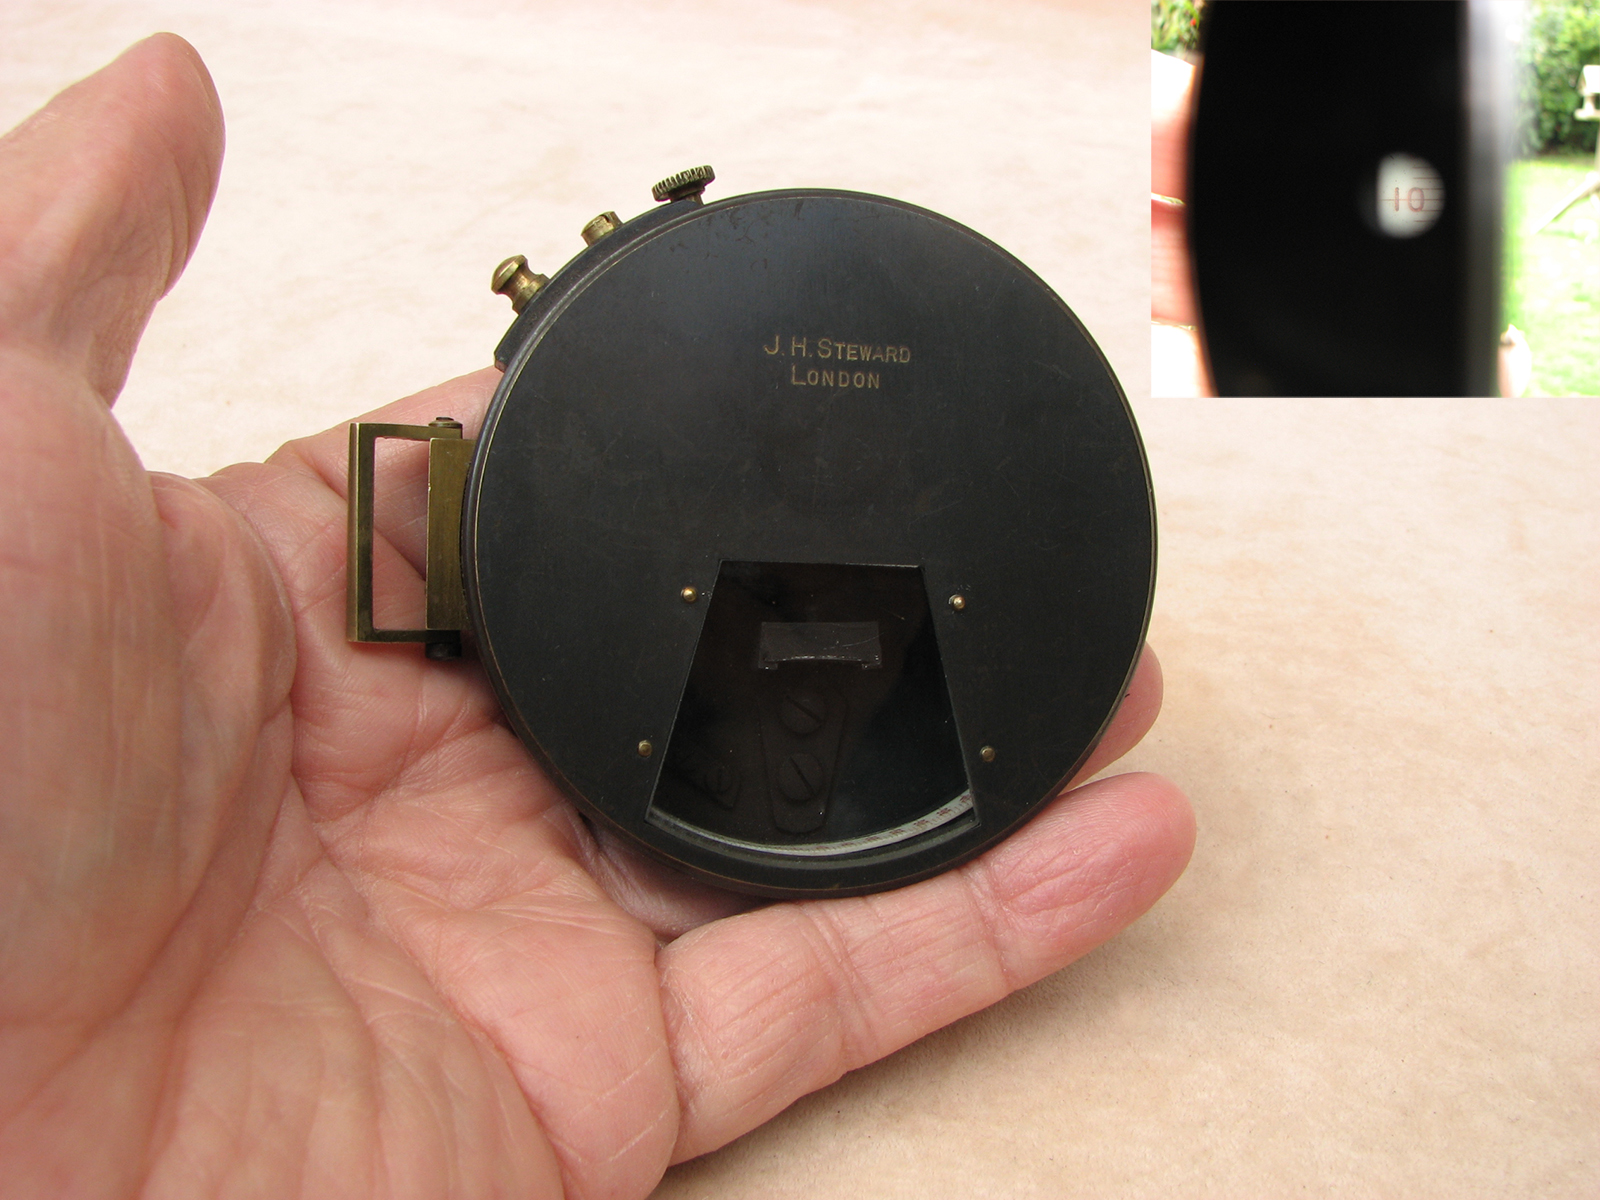 Pre WW1 drum clinometer by J.H. Steward, London.